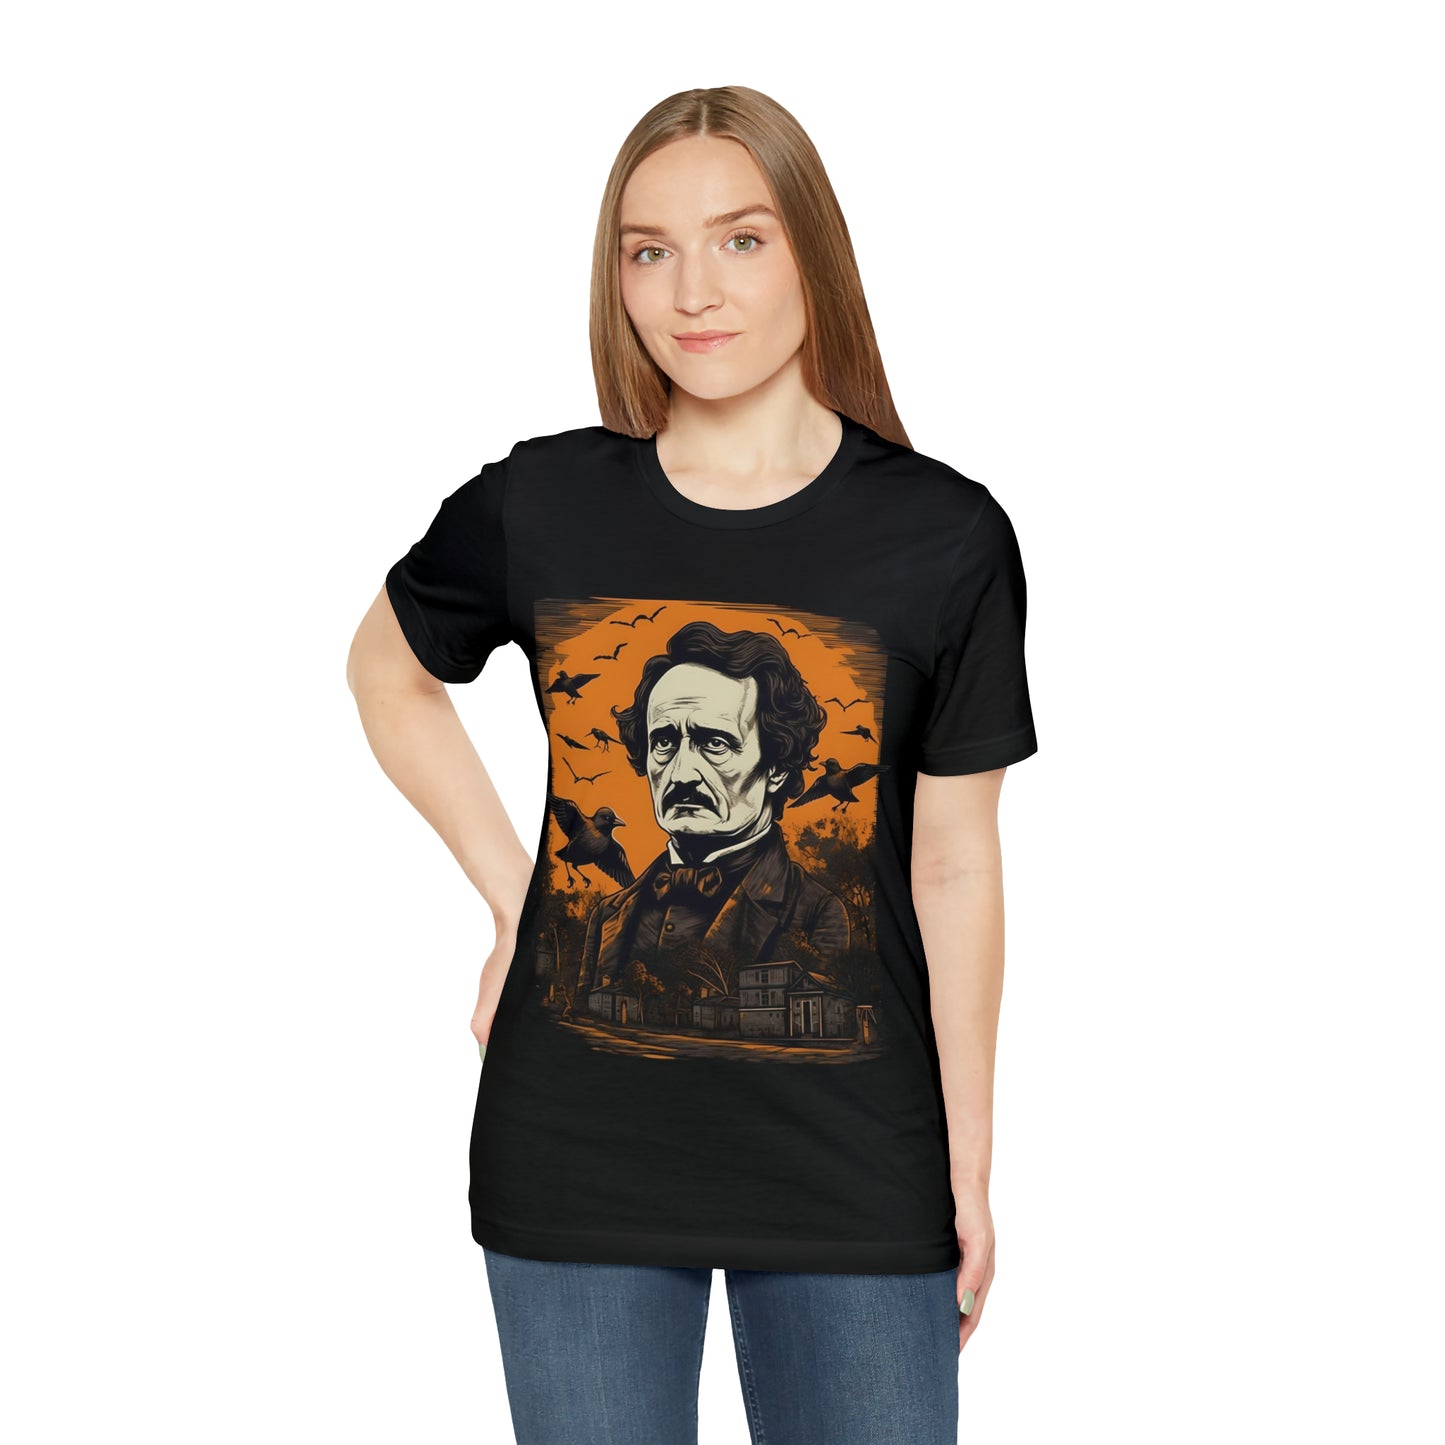 Edgar Allan Poe - Short Sleeve Tee